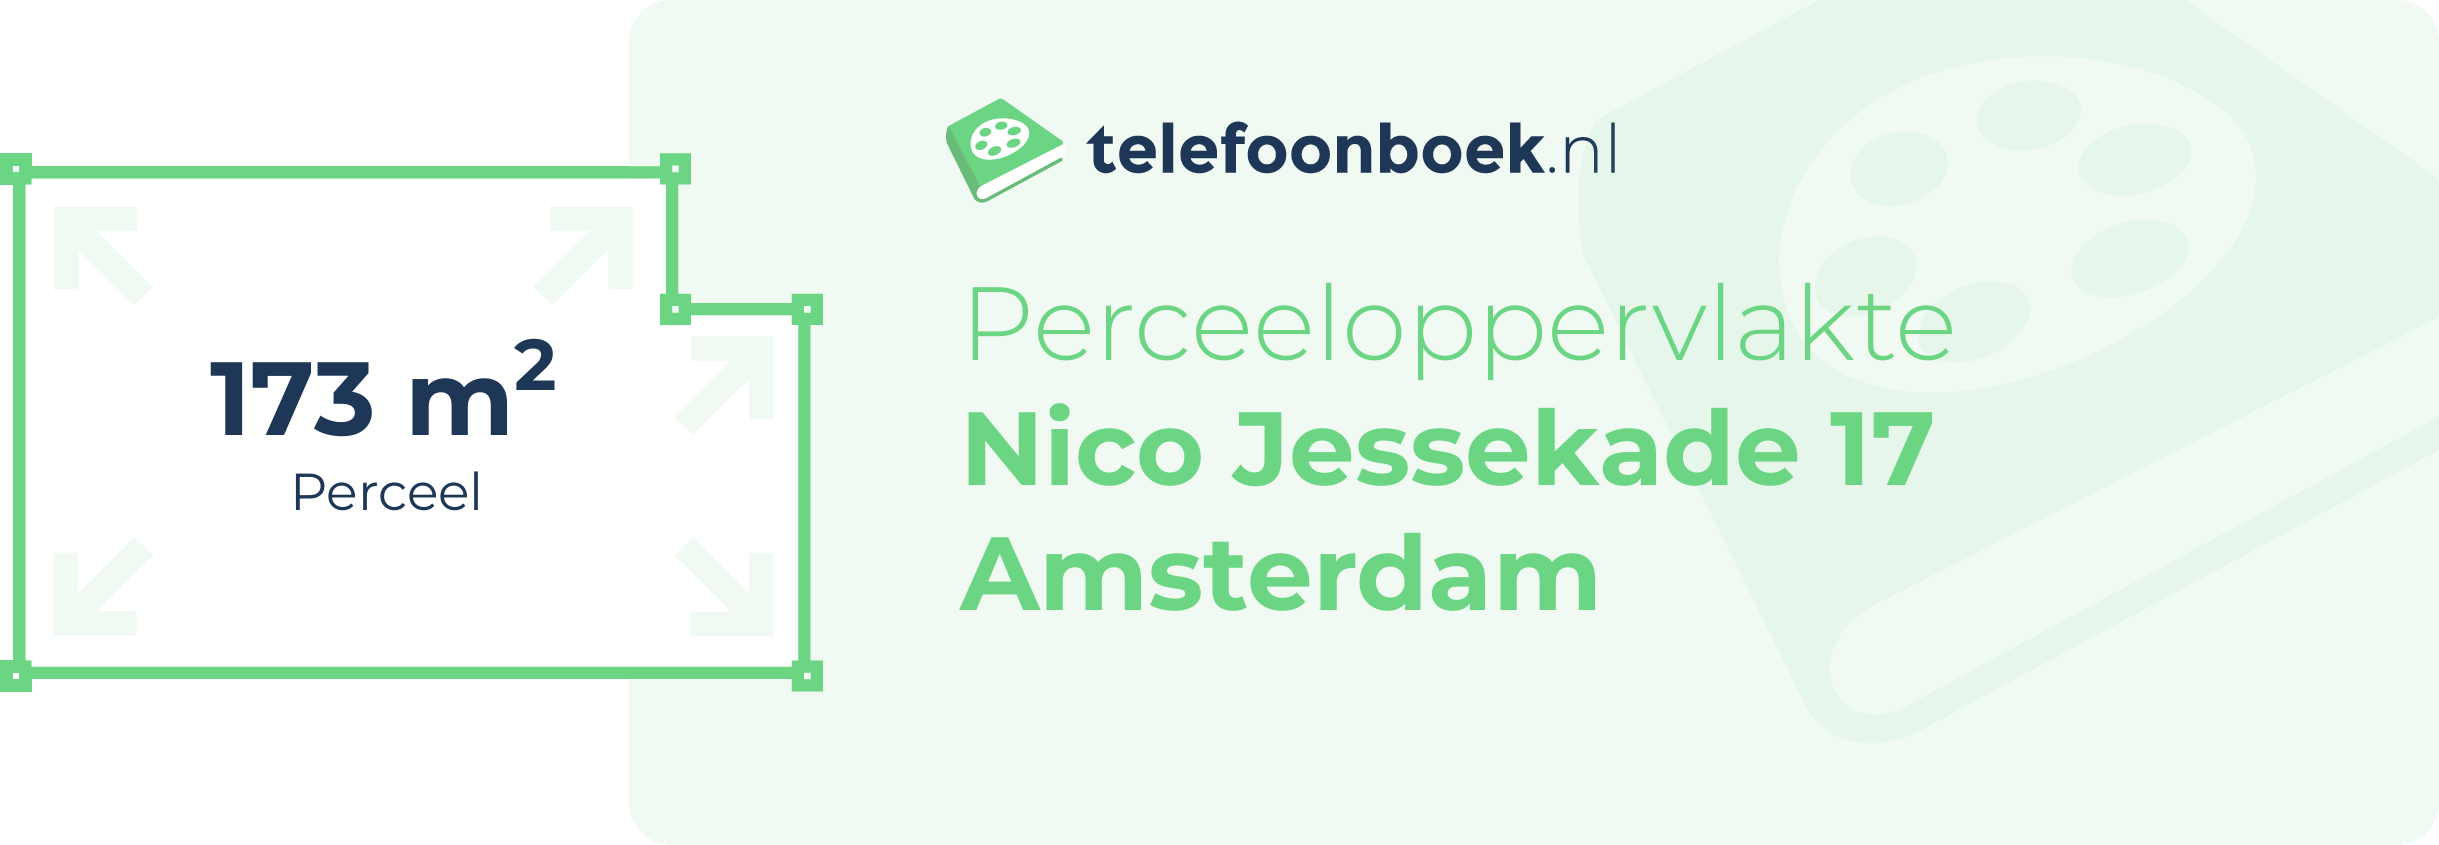 Perceeloppervlakte Nico Jessekade 17 Amsterdam